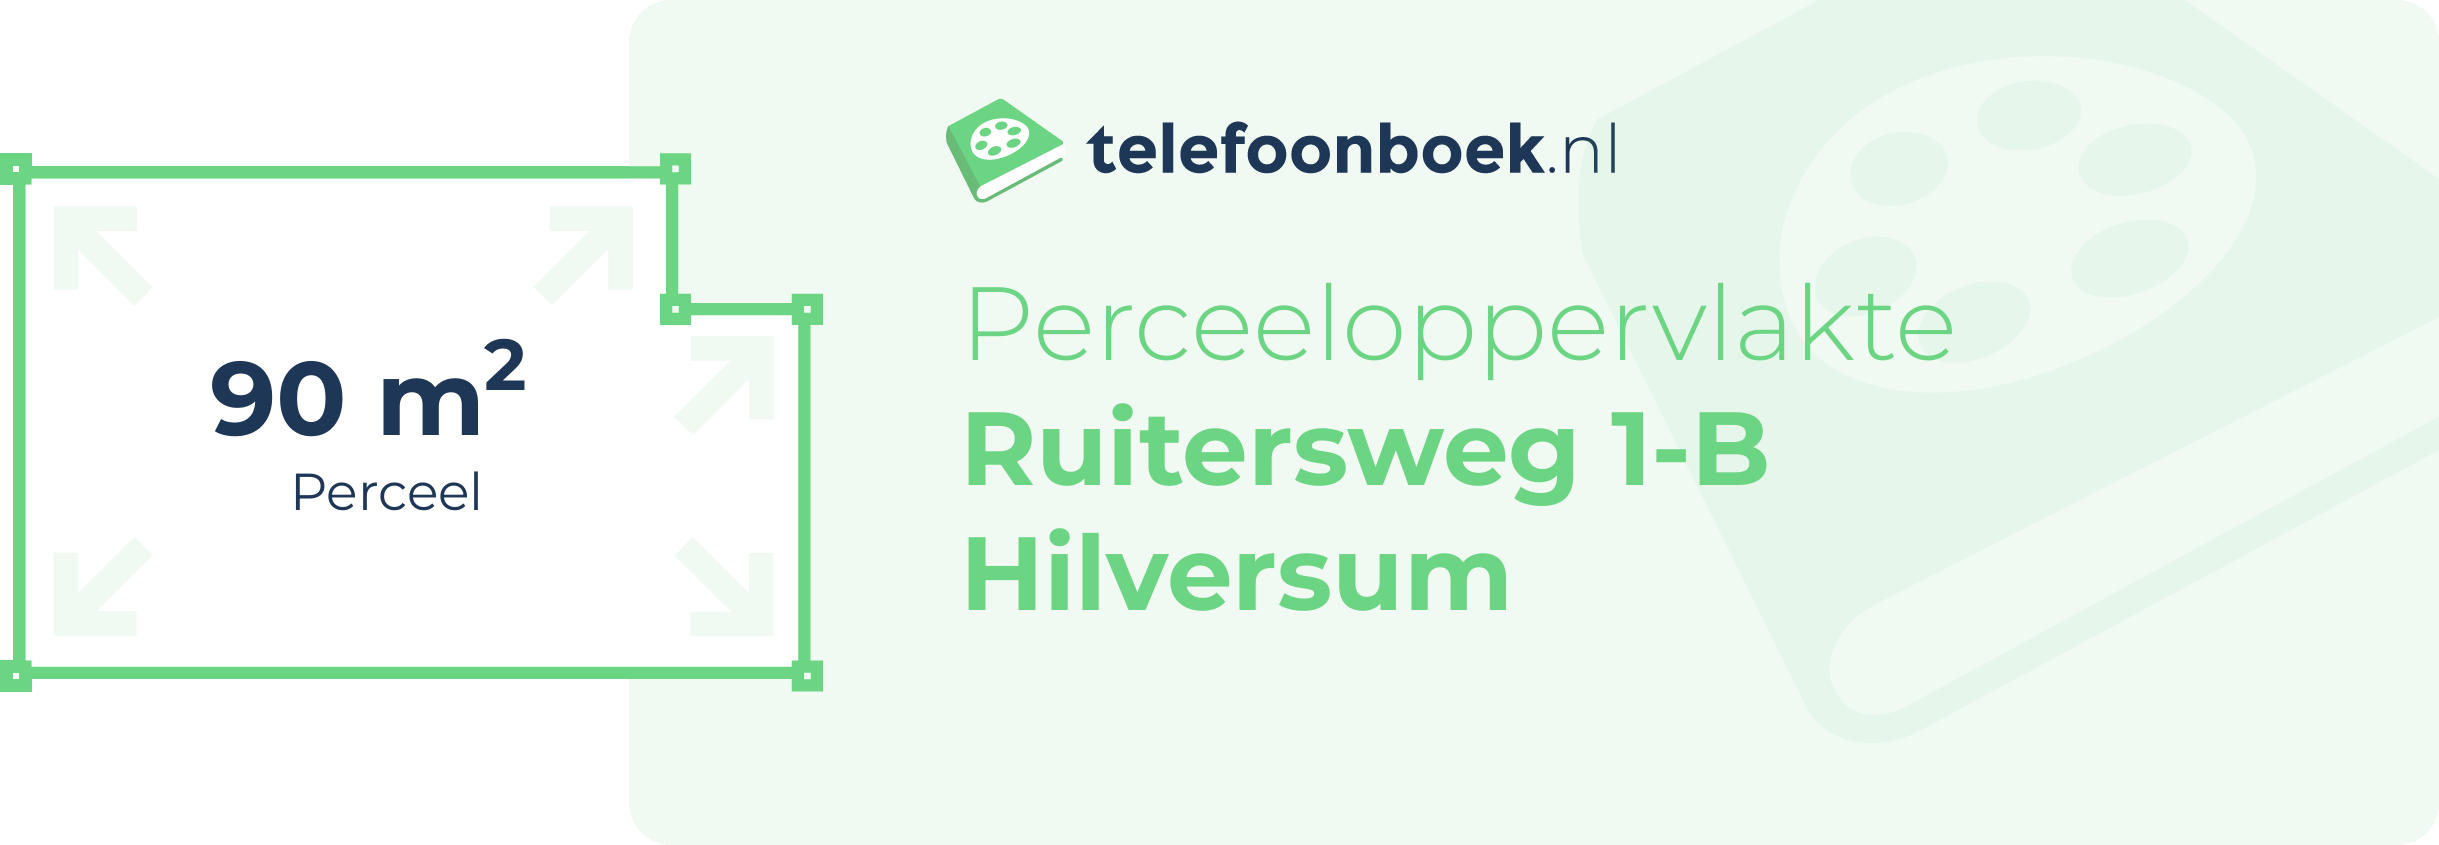 Perceeloppervlakte Ruitersweg 1-B Hilversum